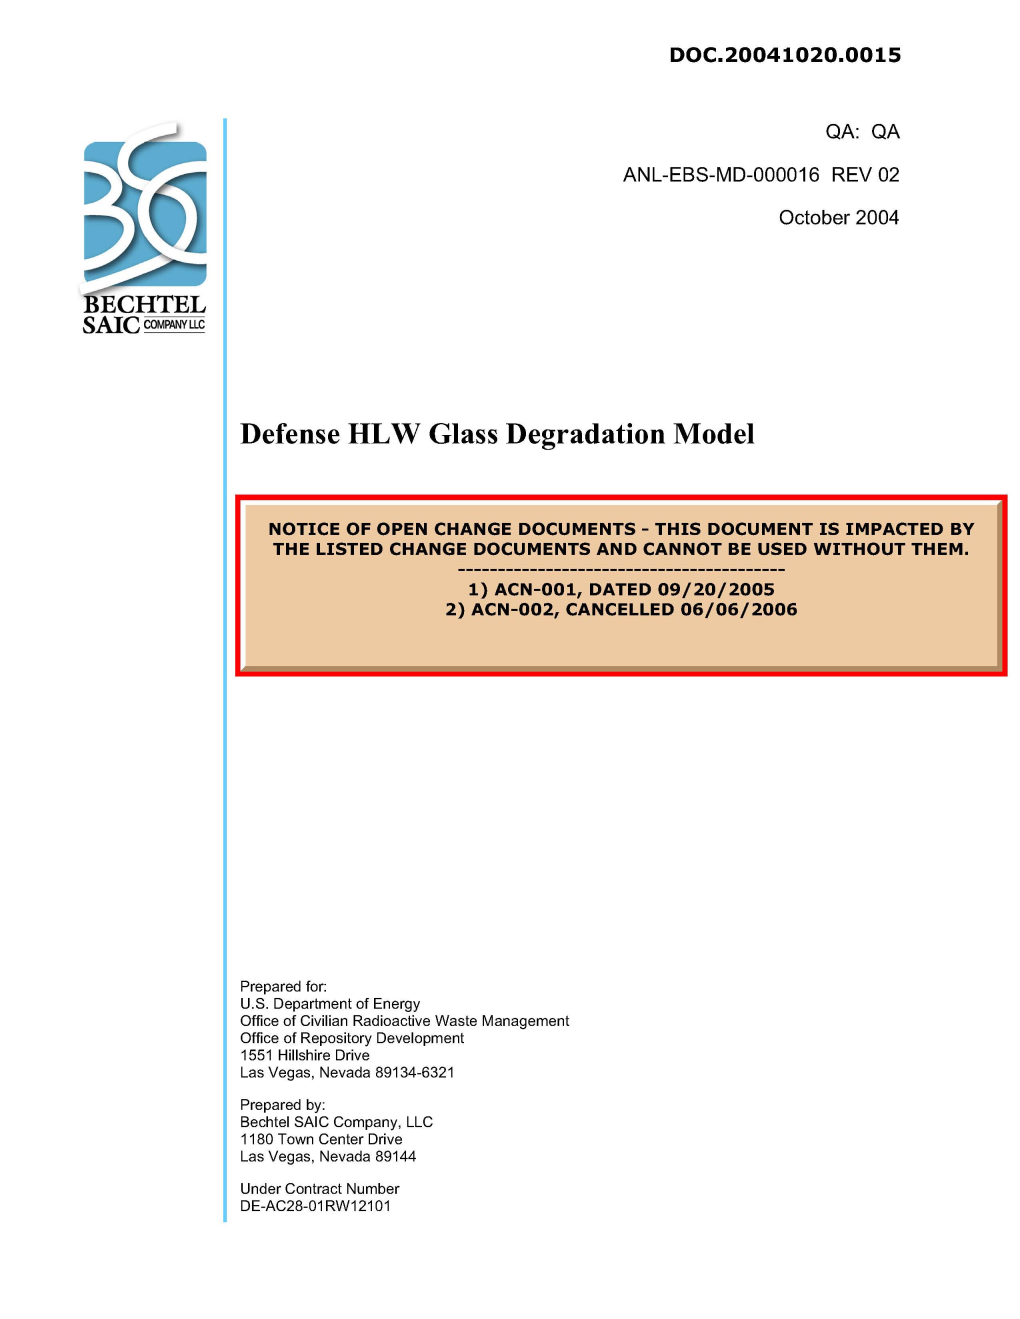 ANL-EBS-MD-000016, Rev. 02, "Defense HLW Glass Degradation